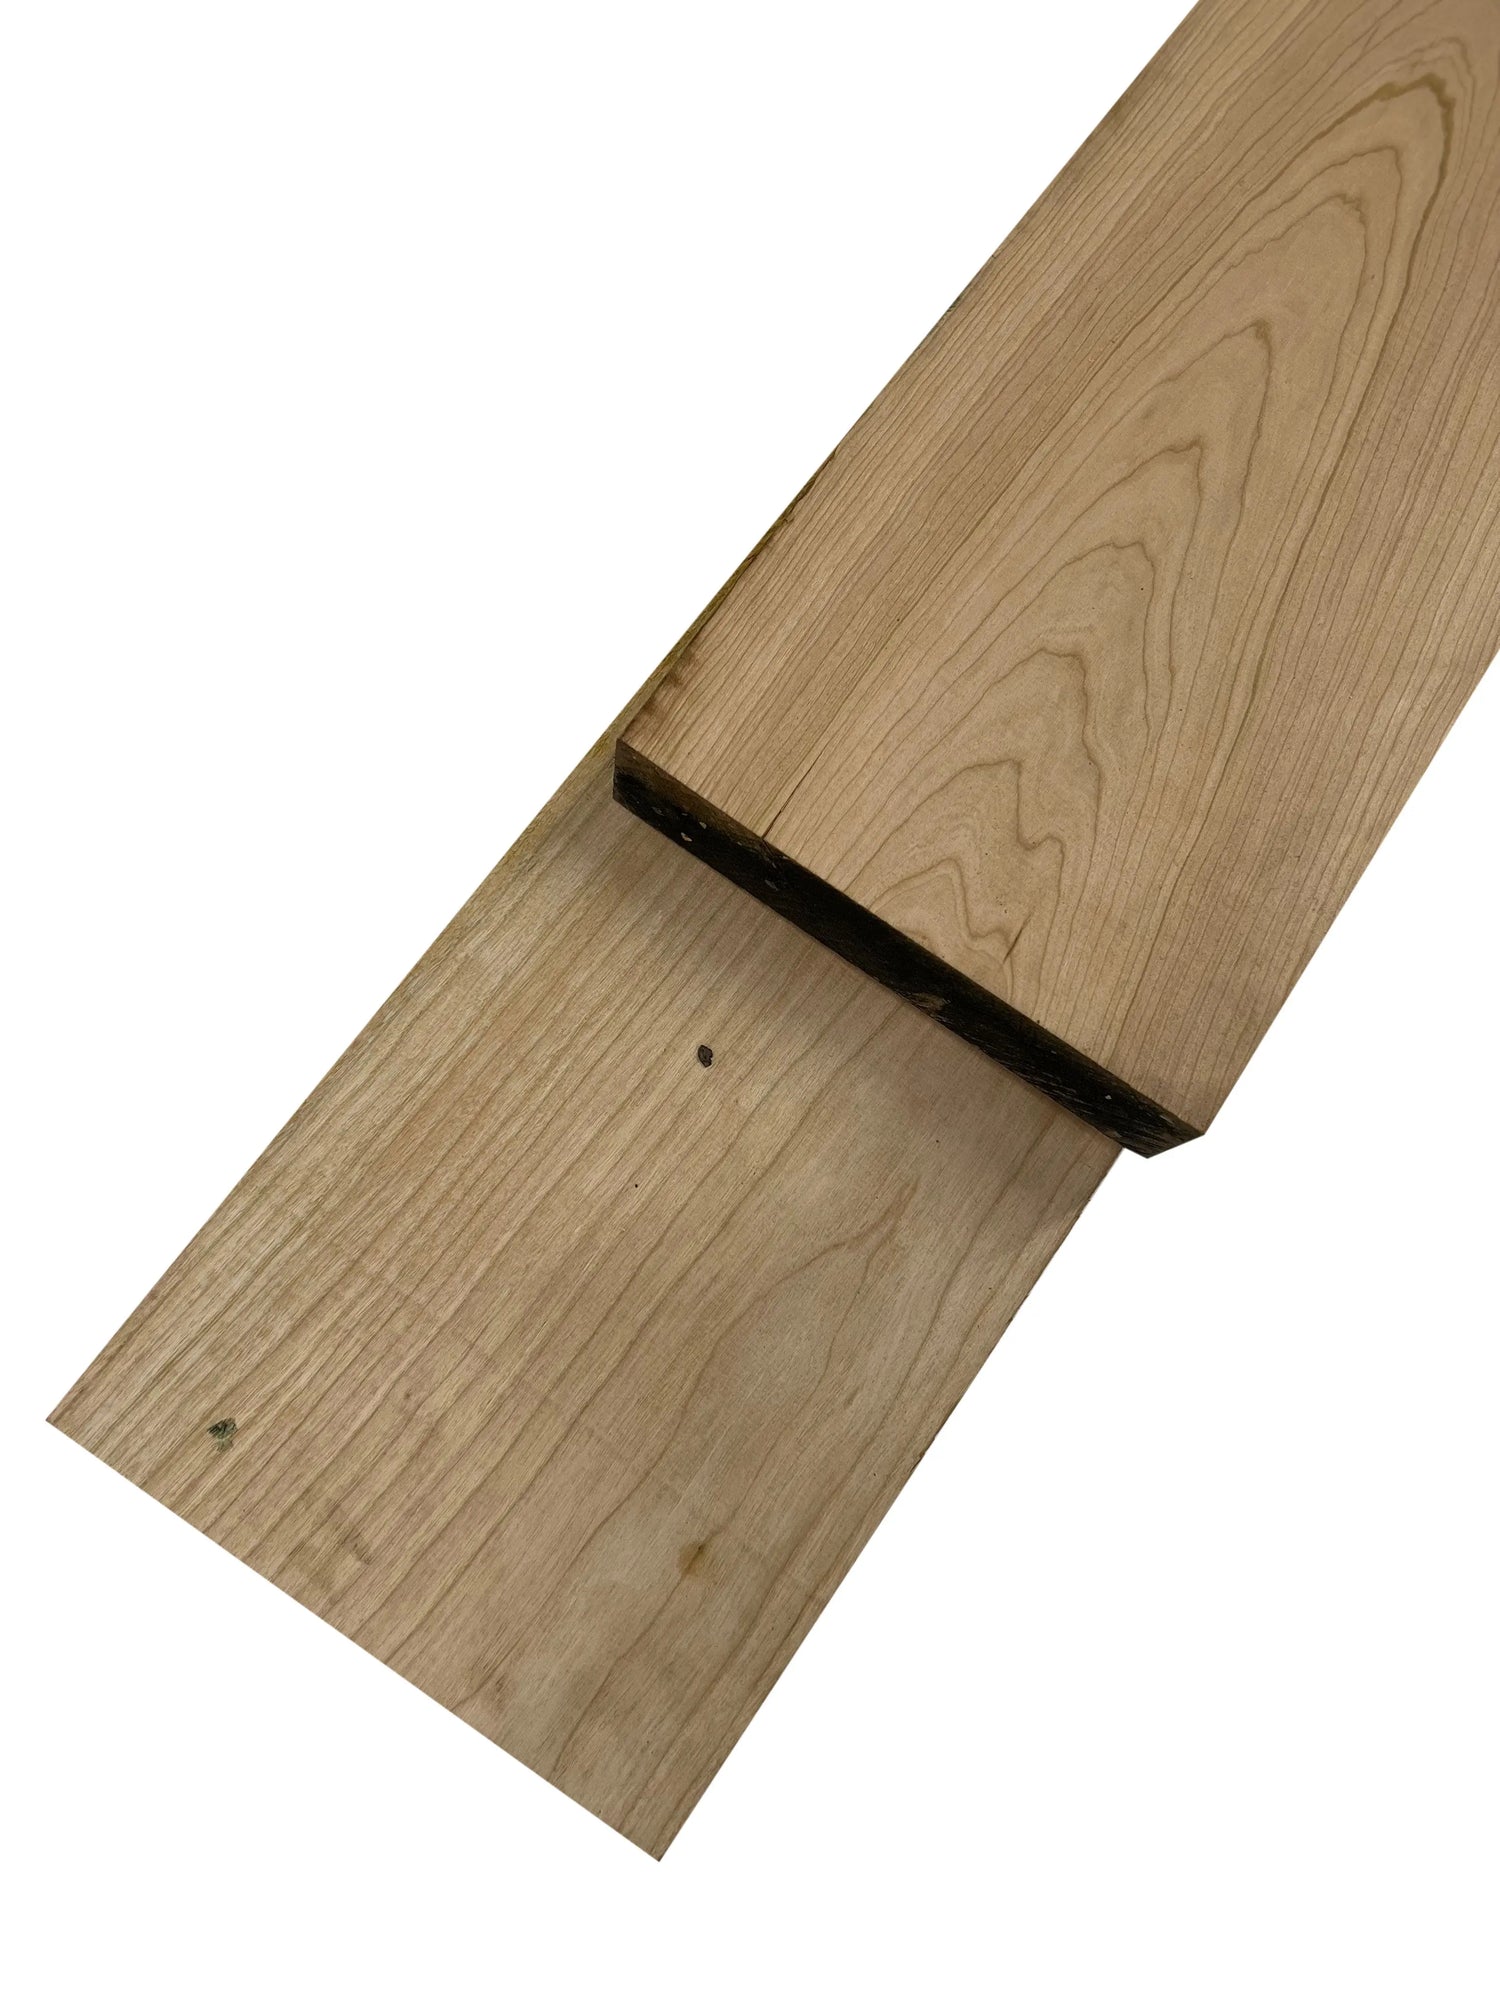 Premium Purpleheart Lumber Available at Wholesale Price